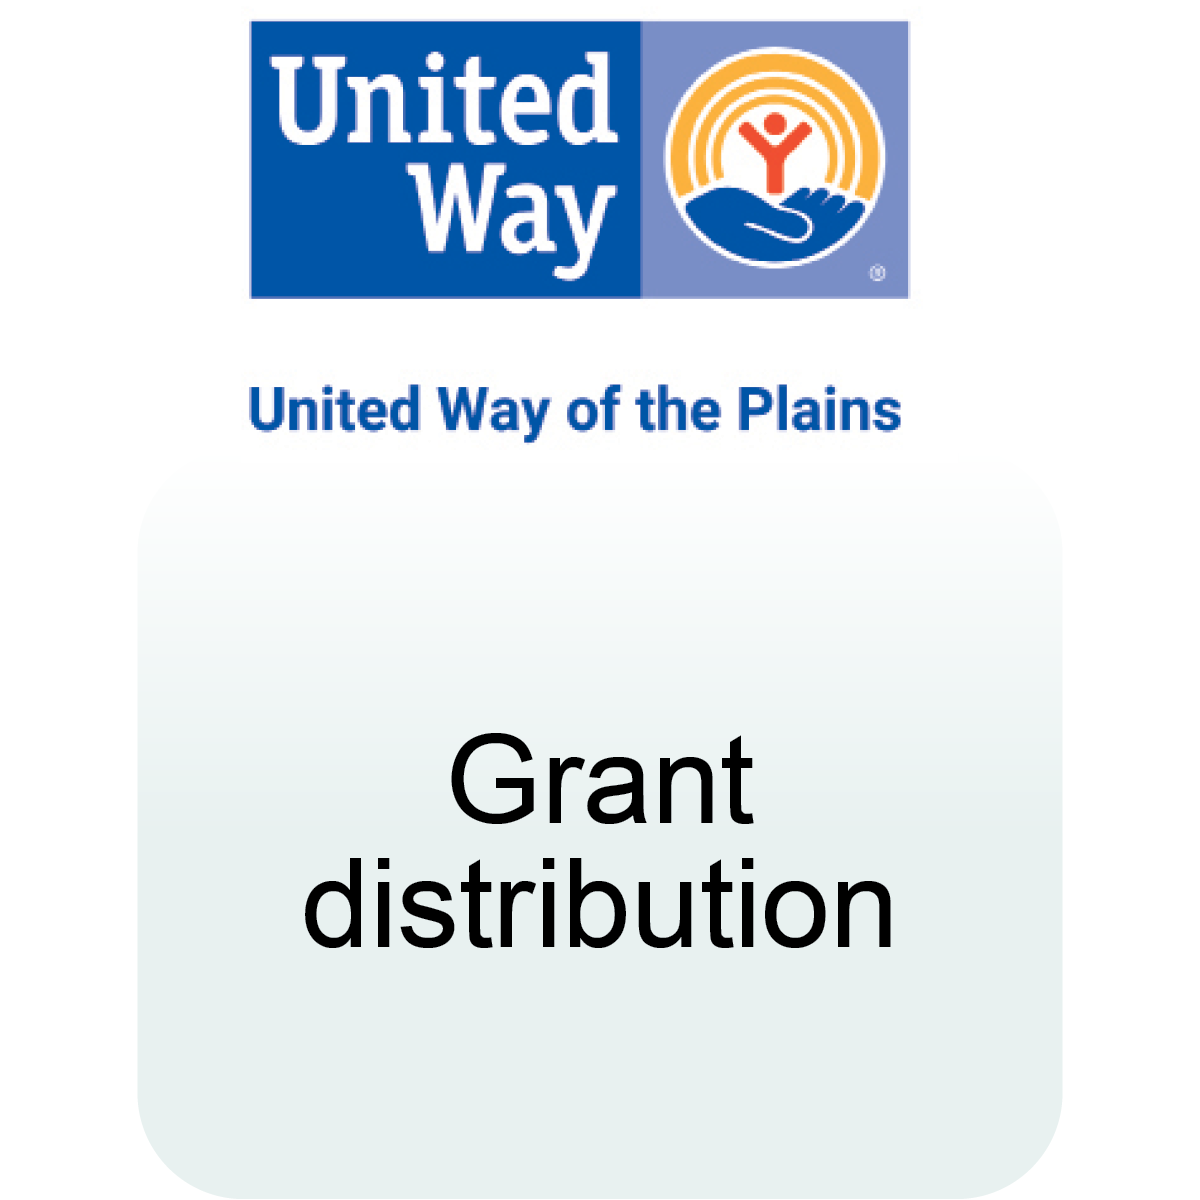 United Way, Grant distribution